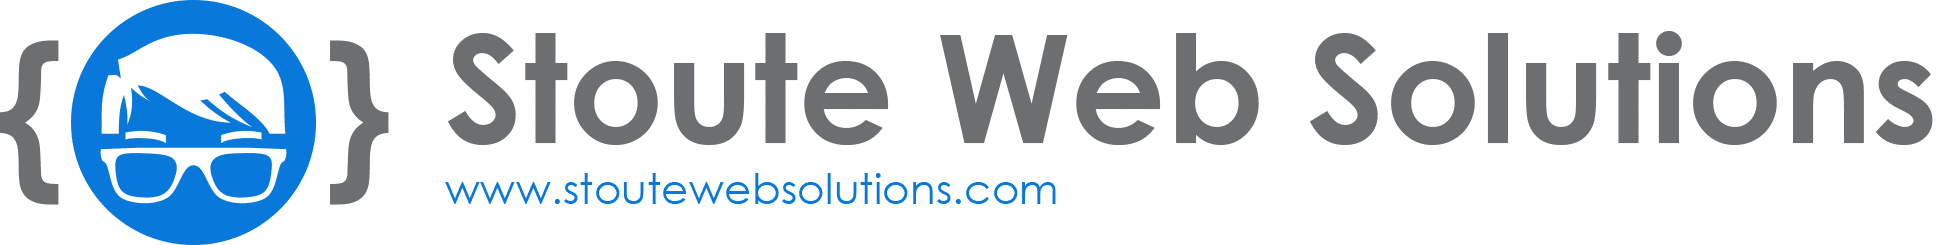 Stoute Web Solutions Logo - Website Design Services Portland Oregon